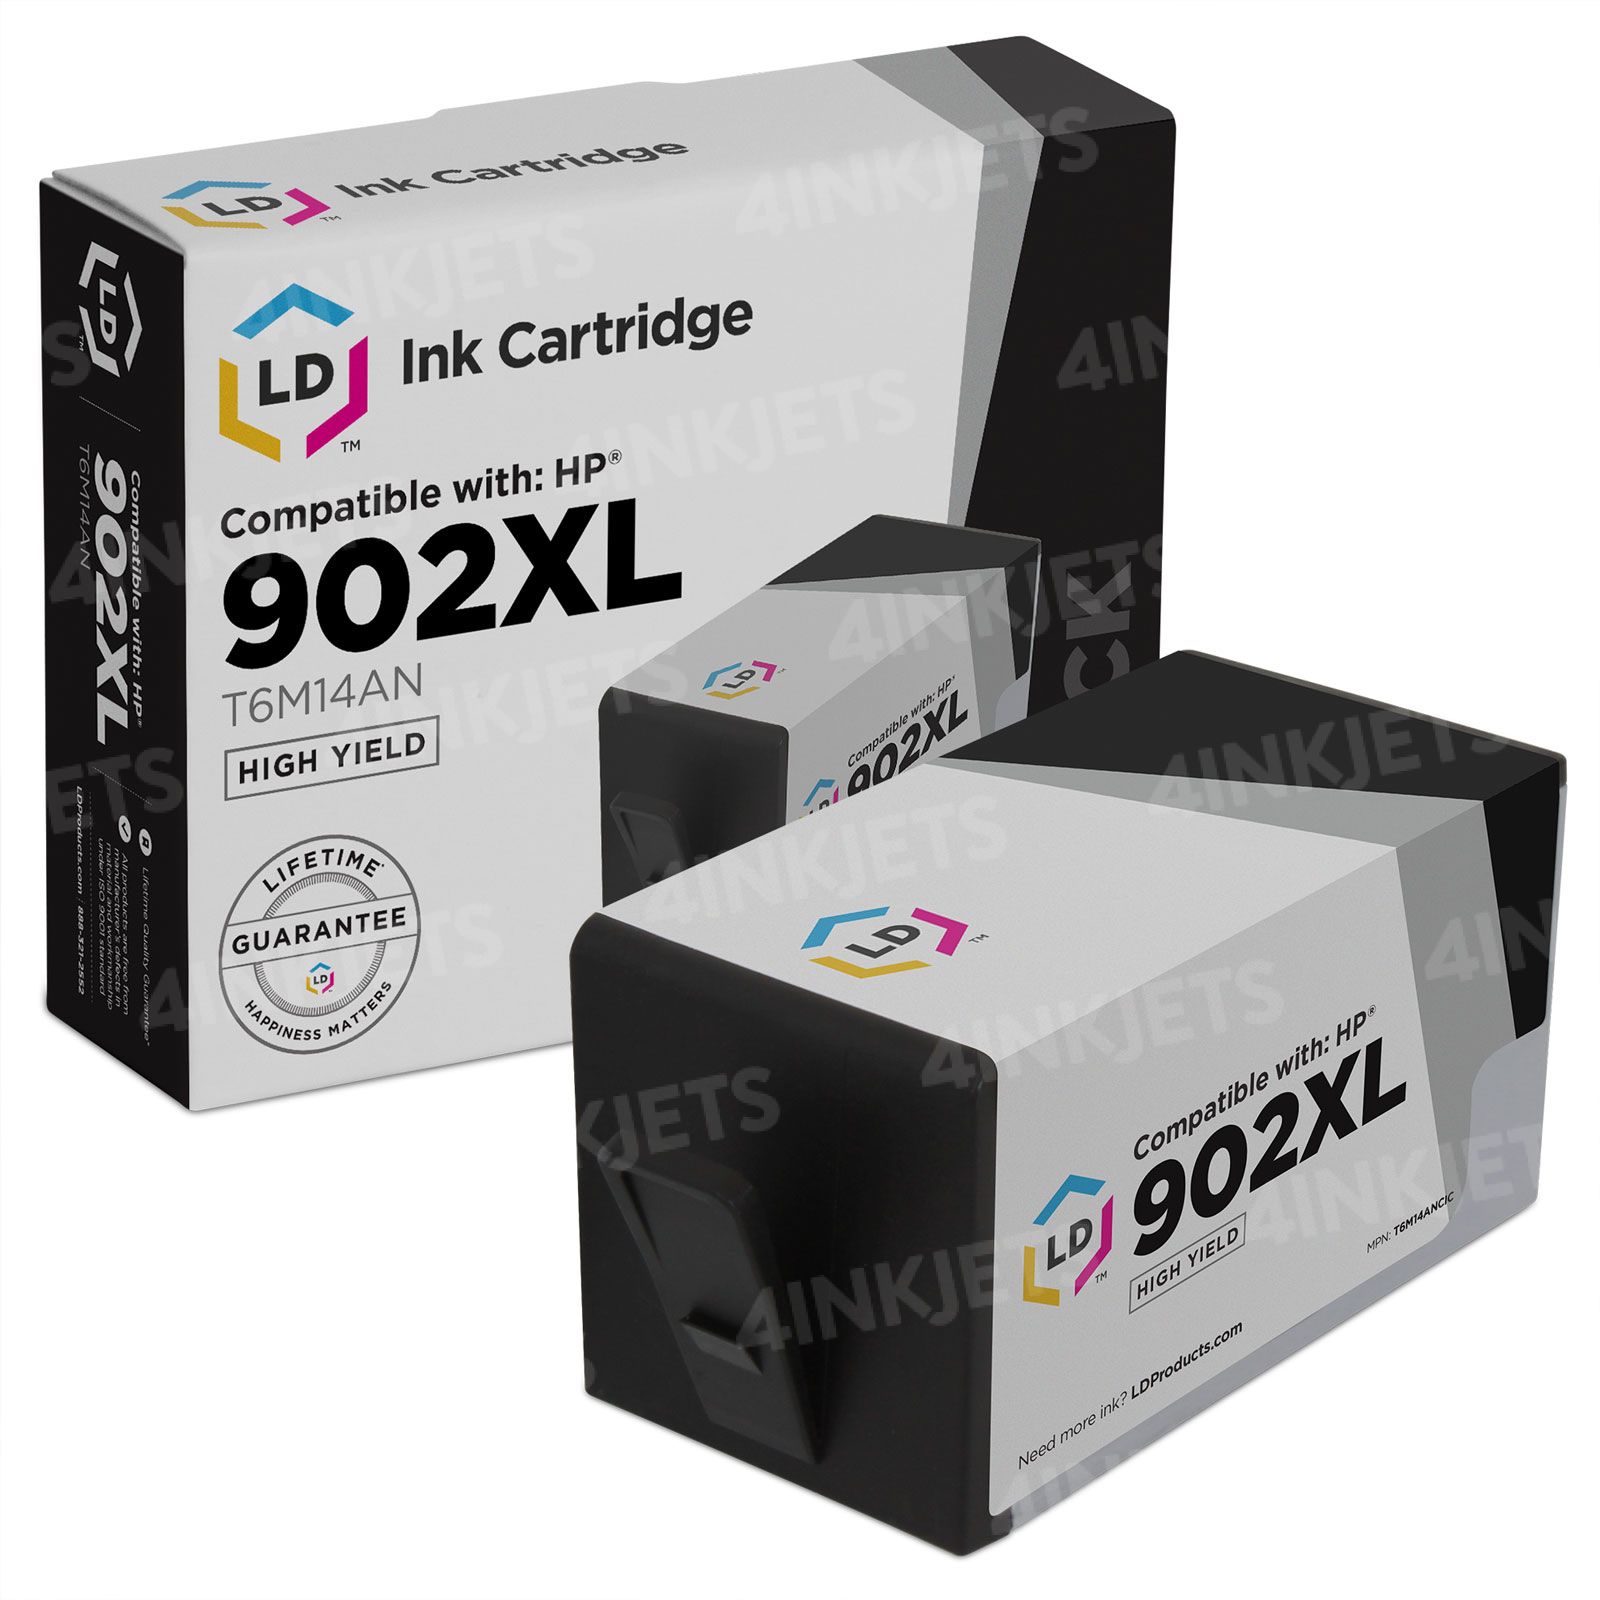  Kingjet 902XL Ink Cartridges for HP Printers